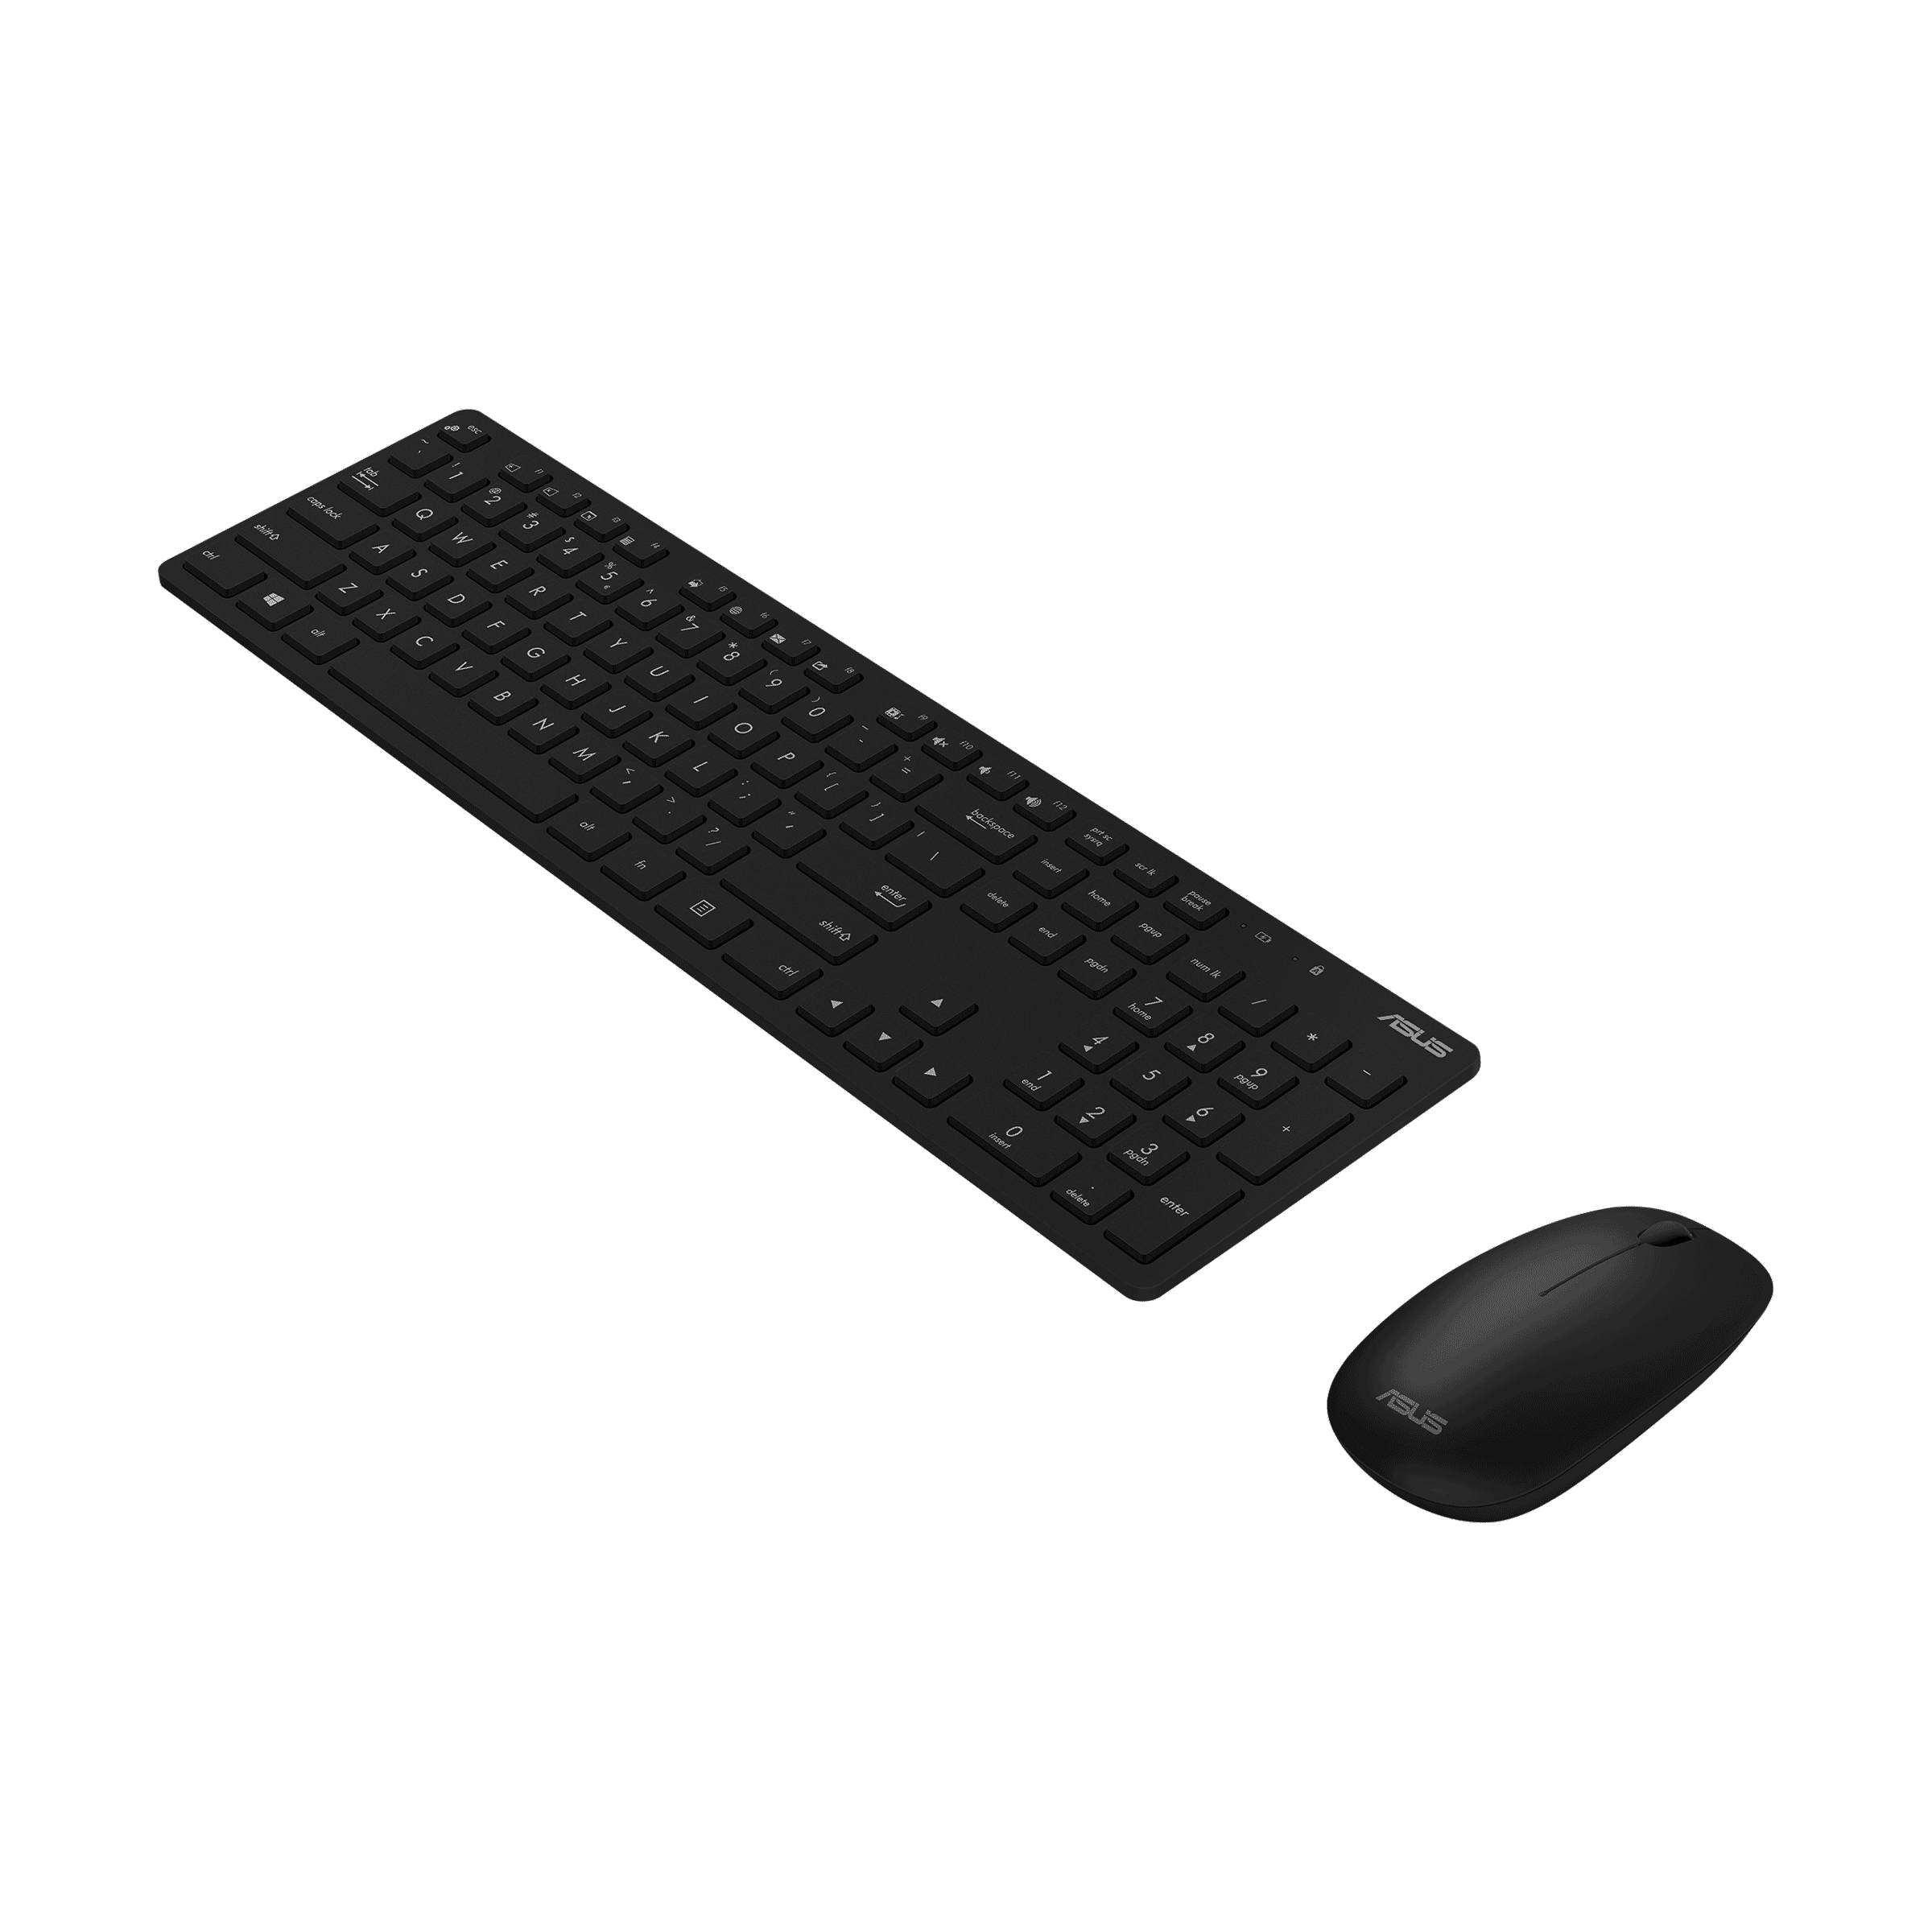 ASUS W5000 Wireless Keyboard and Set｜Keyboards｜ASUS Global